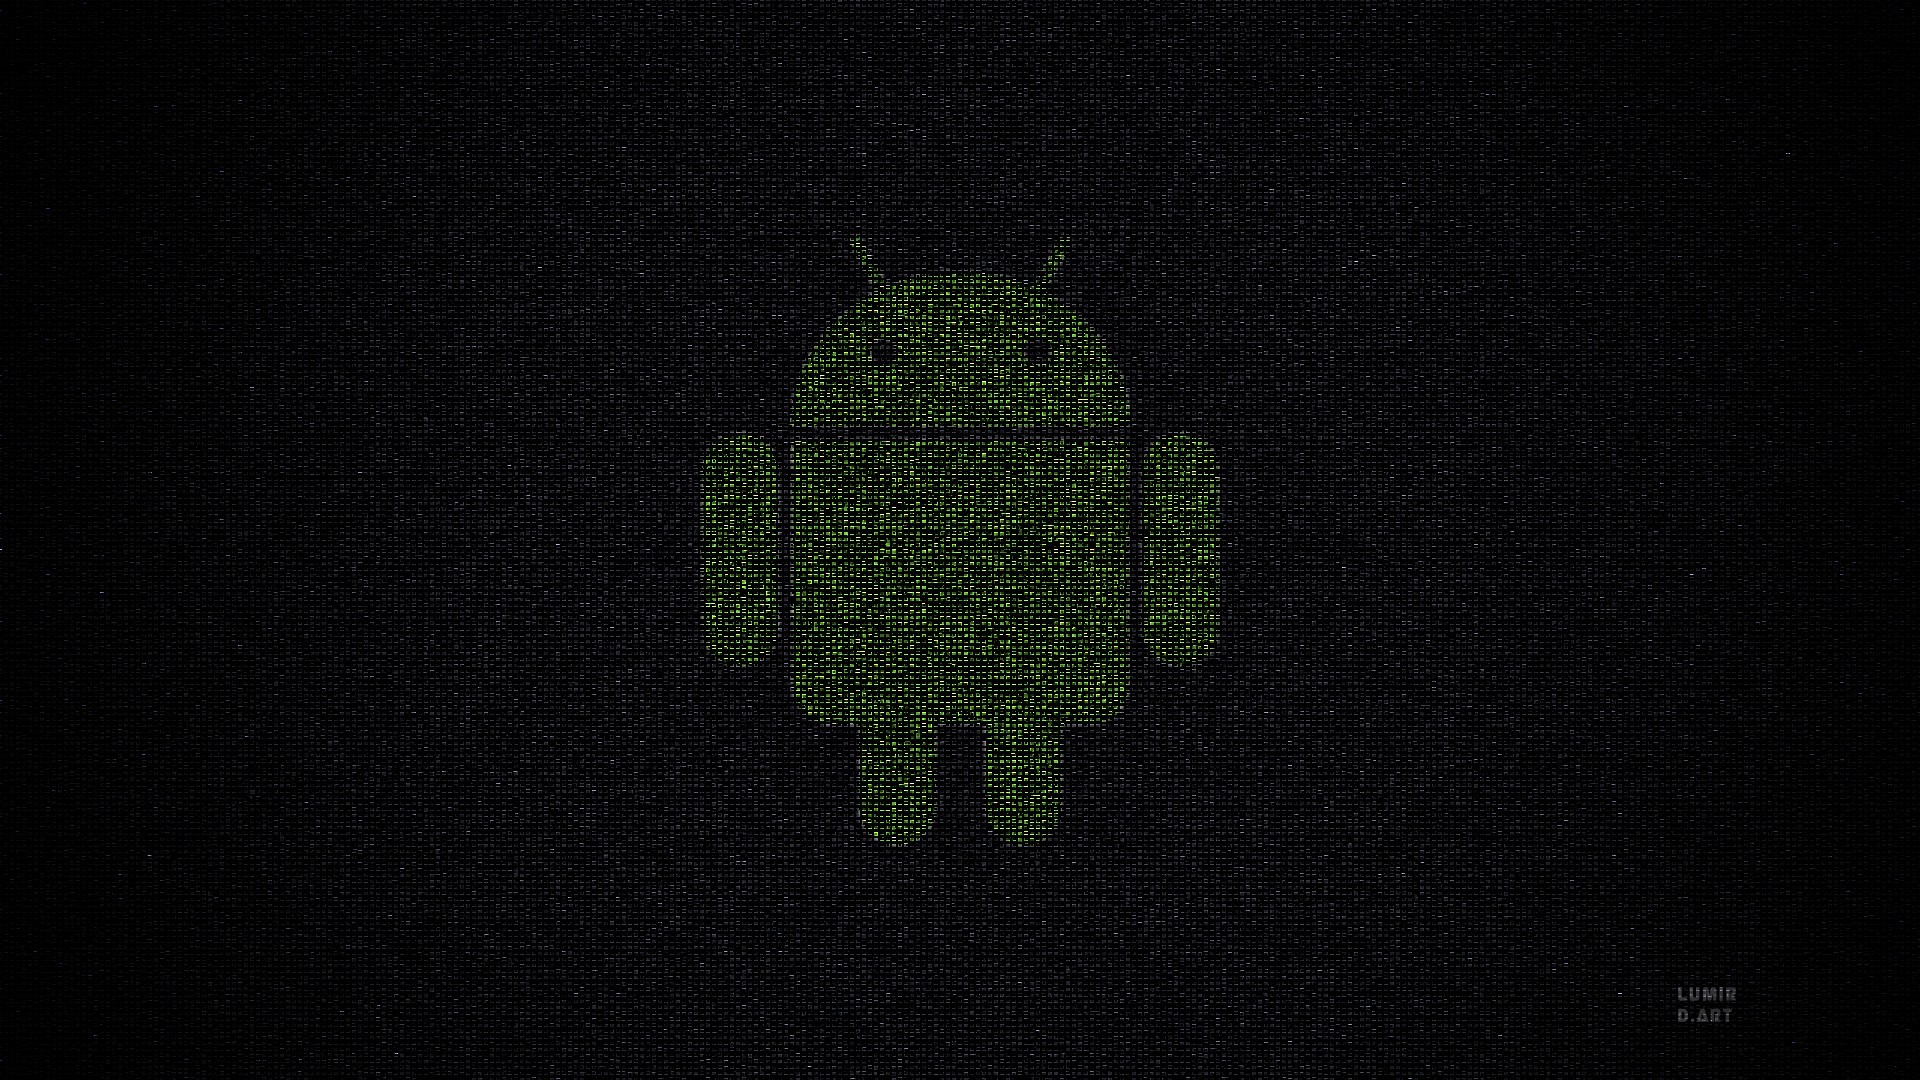 Dark Wallpaper Android Z1A - Wallpaperhd.press